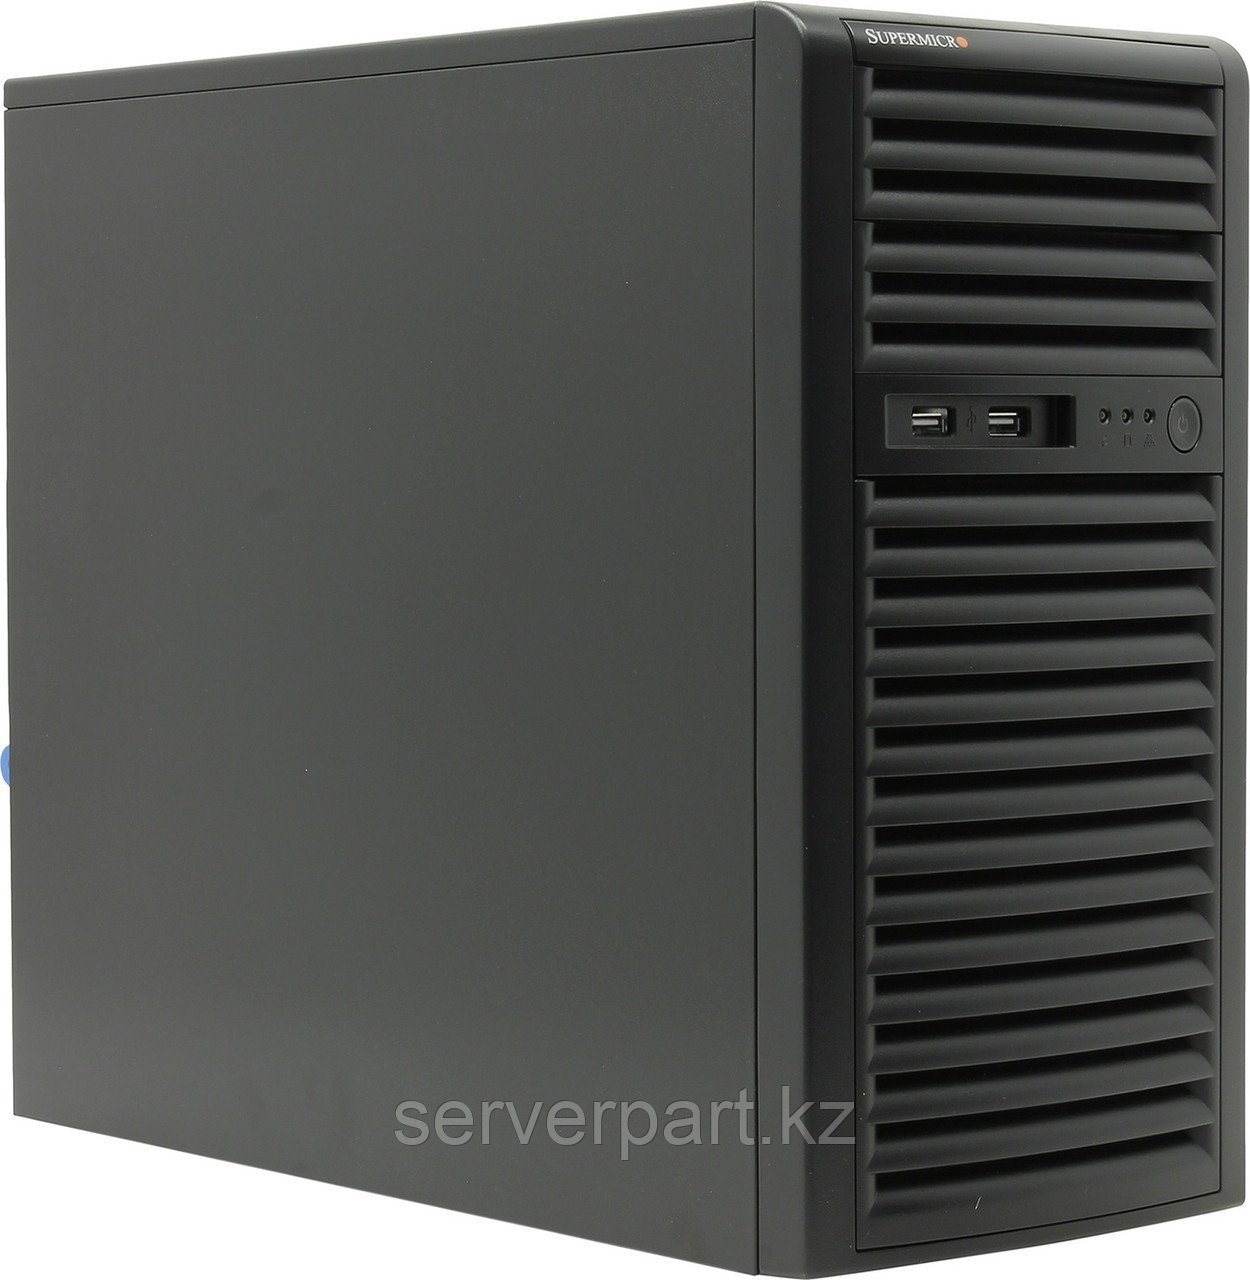 Сервер Supermicro SYS-5039D Tower/4-core intel xeon E3-1220v6 3GHz/32GB EUDIMM/1x240GB SSD RI Hyb, фото 1